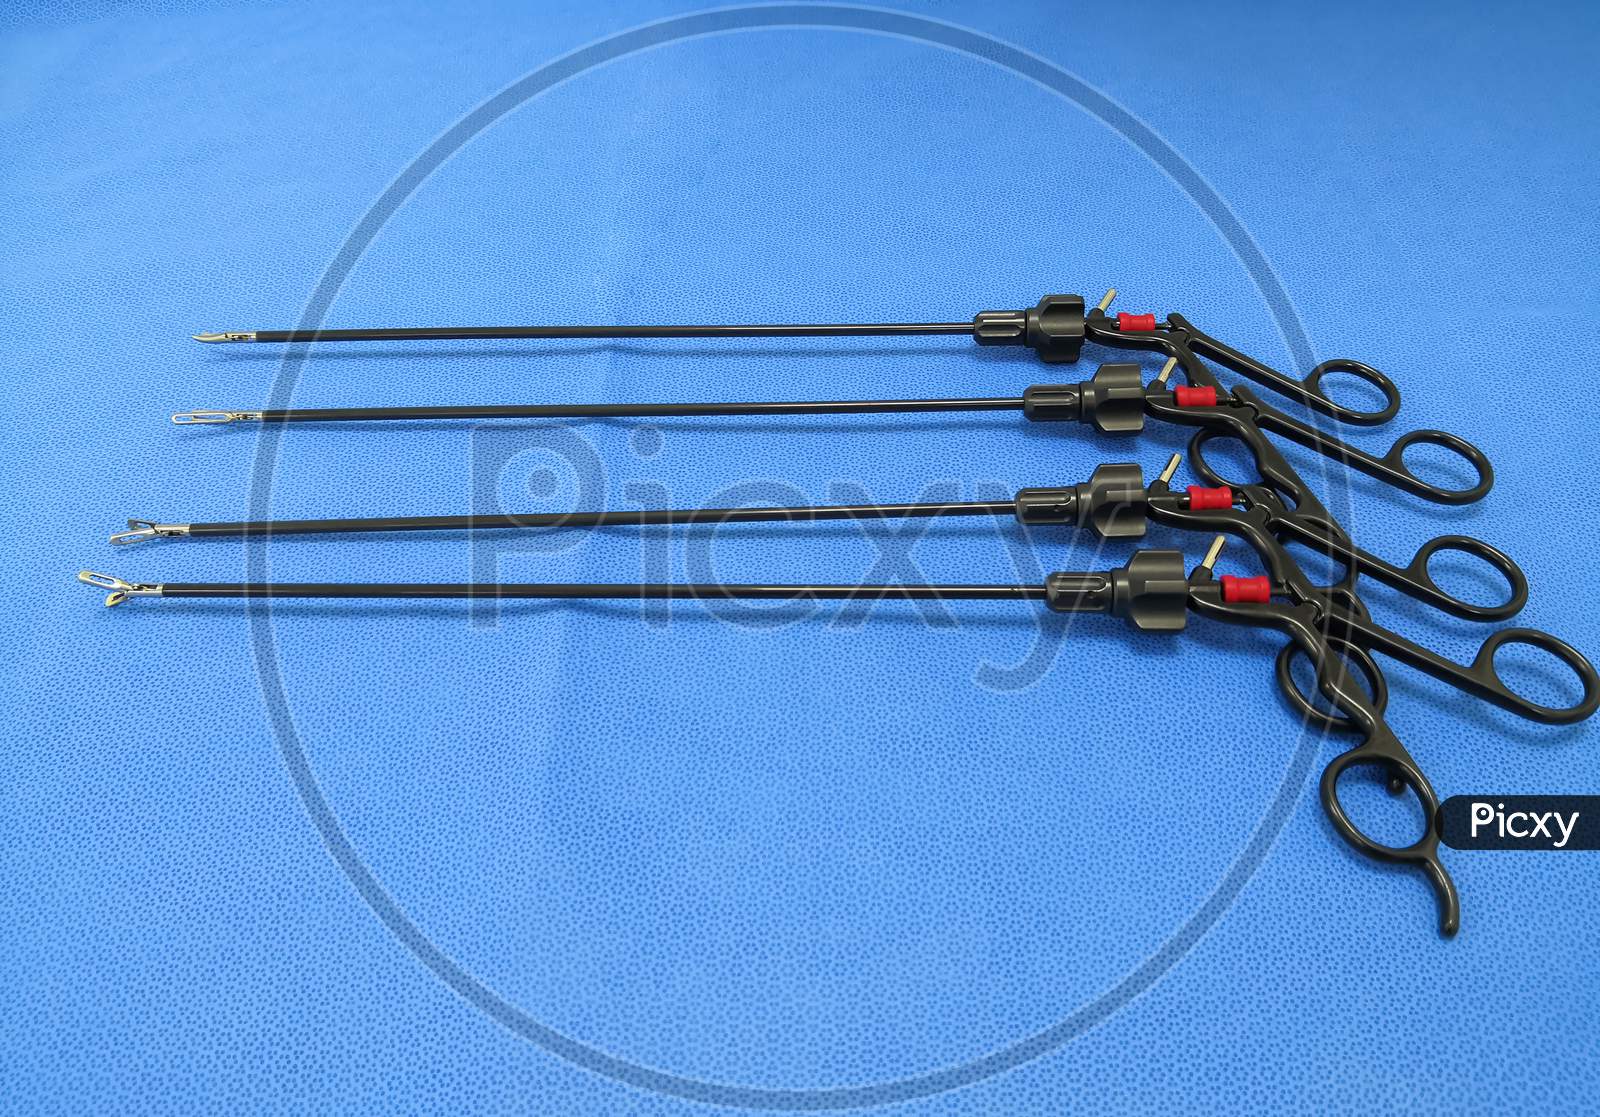 Arranged Laparoscopic Surgical Instruments